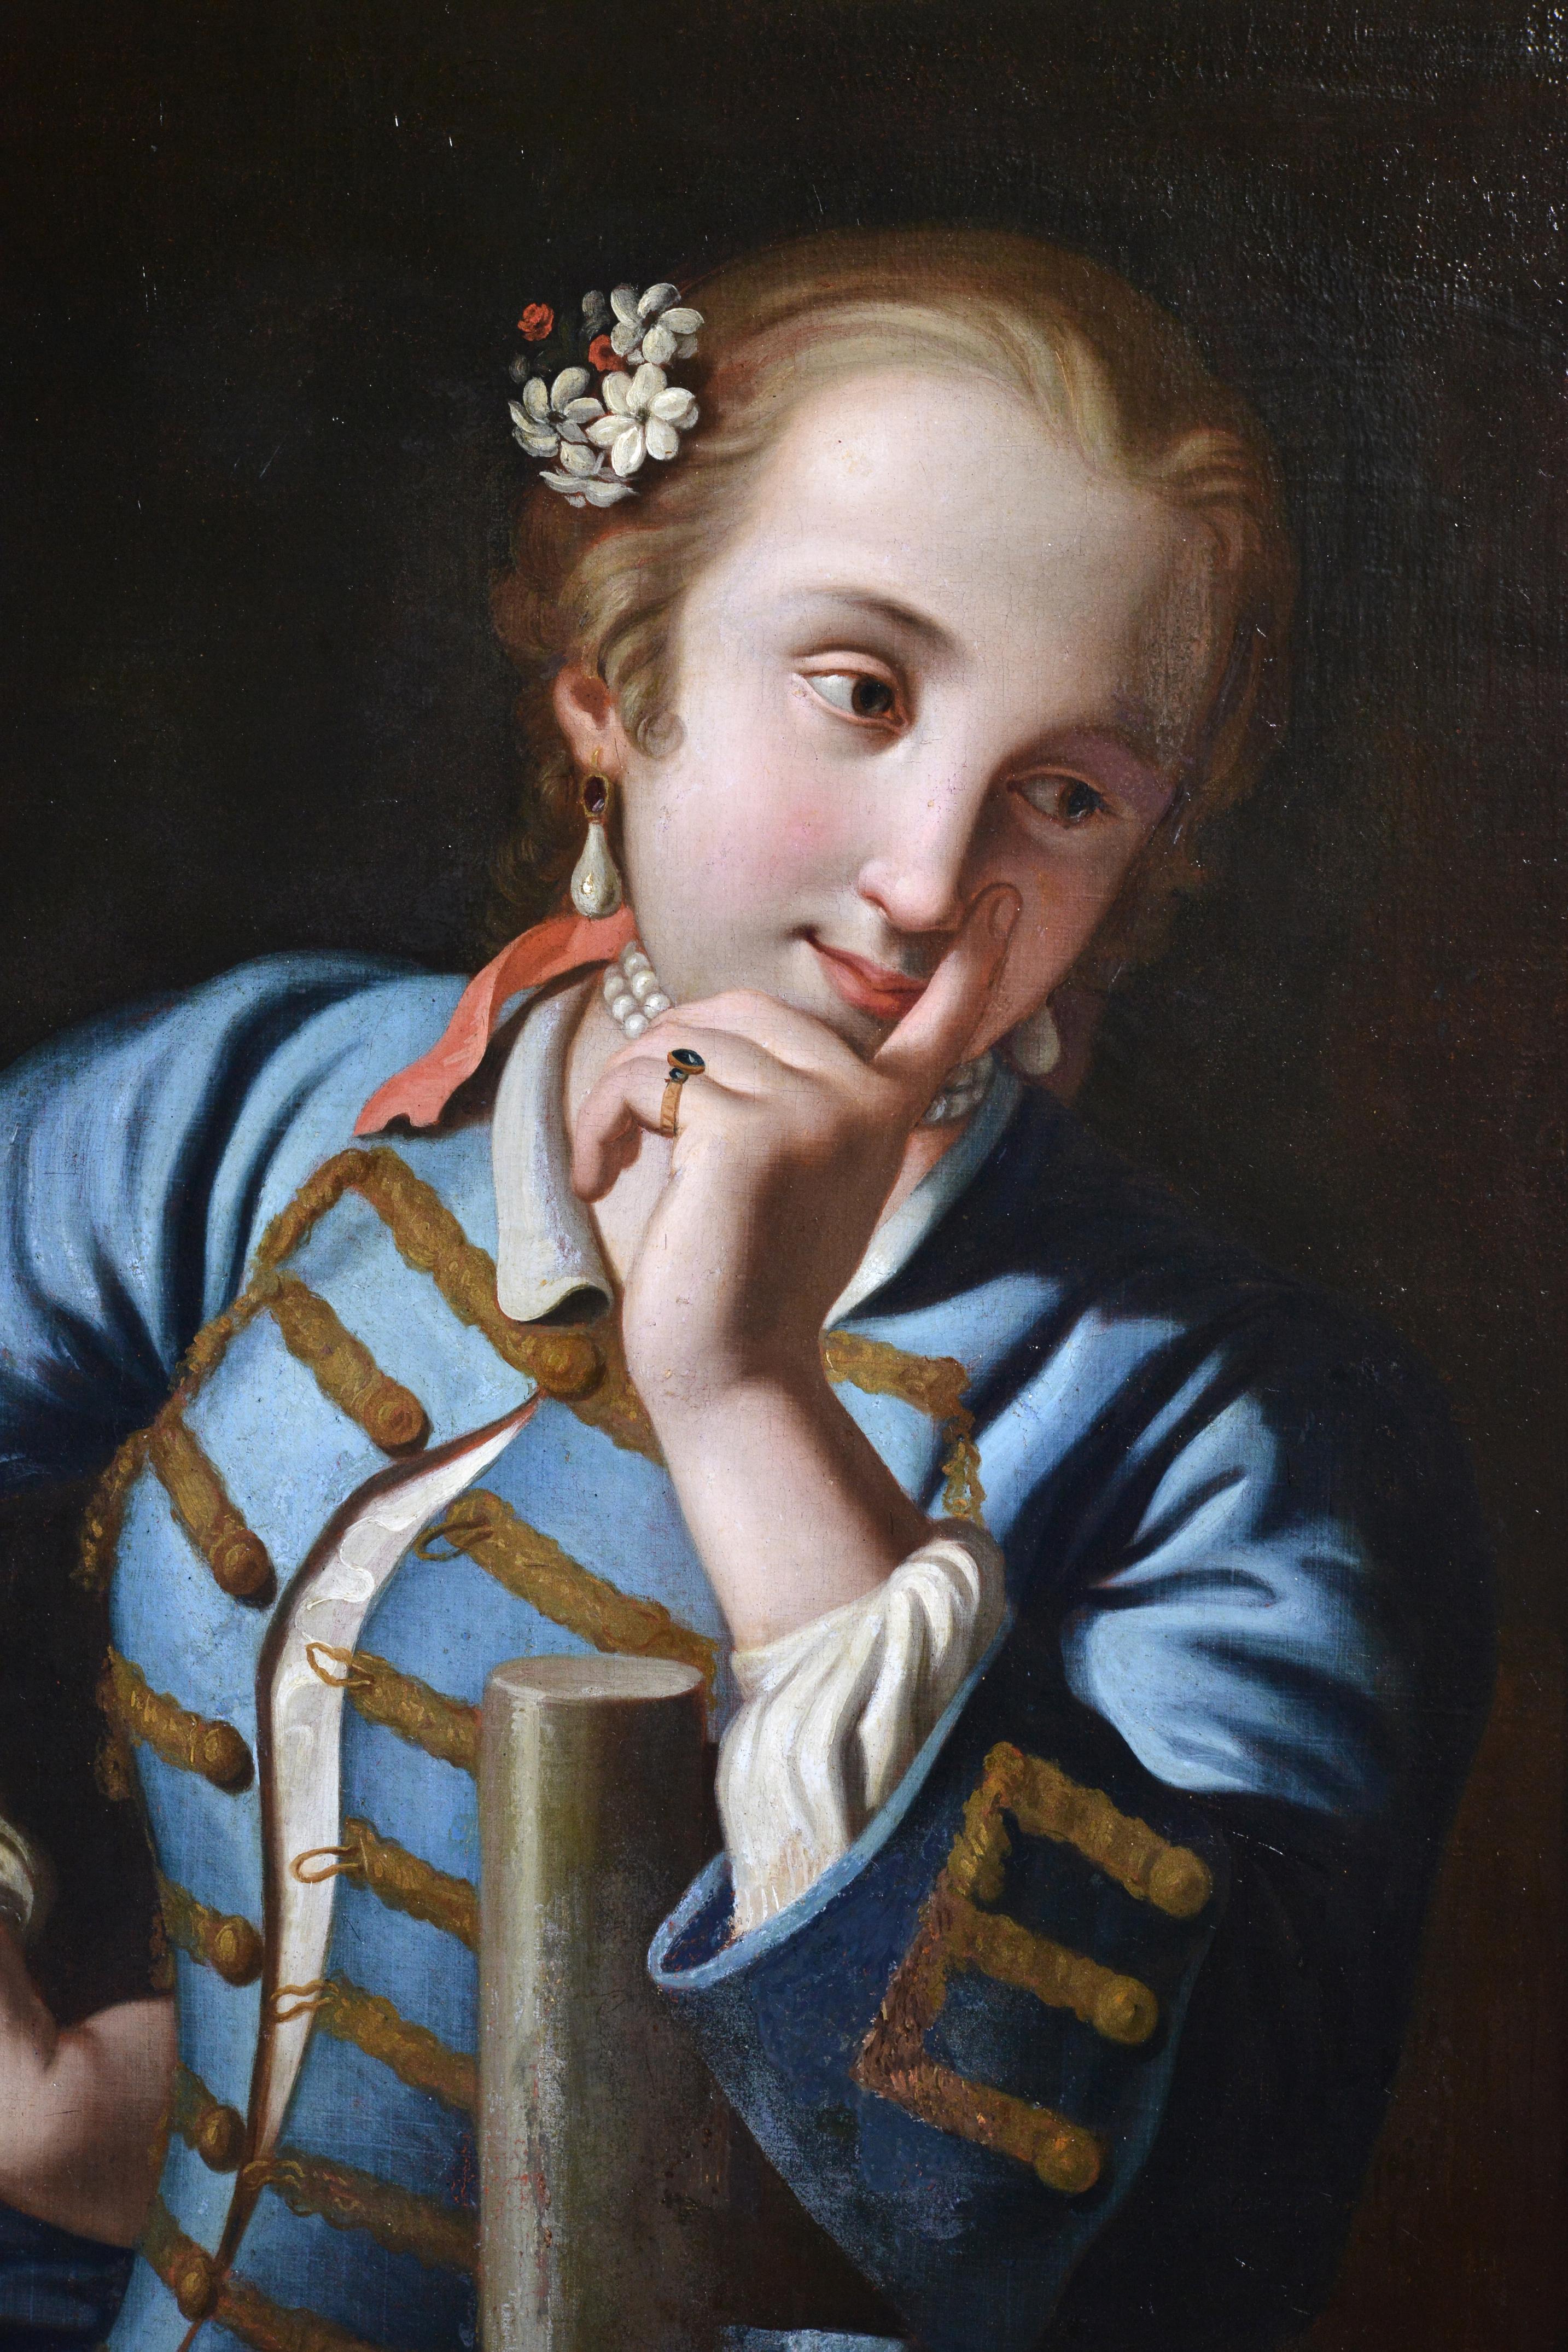 Portrait of Languid Girl in Blue Camisole 18th century Italian Rococo Master - Realist Painting by Pietro Antonio Rotari